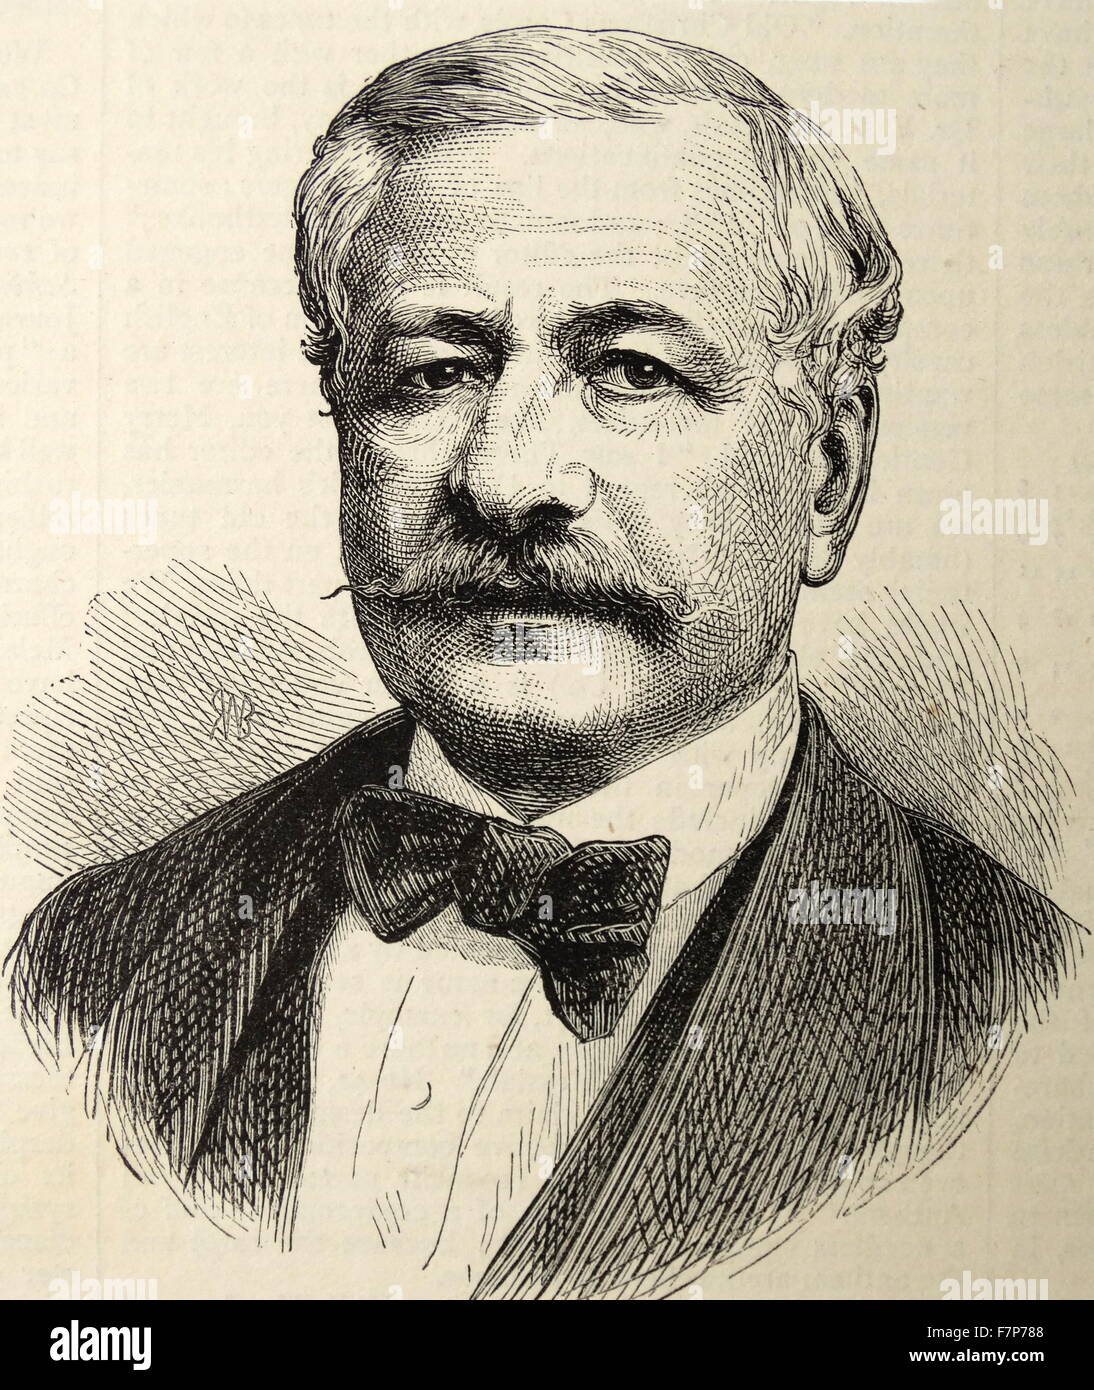 Ferdinando de LESSEPS - 1805-1894 francese canal promotore e diplomatico. Foto Stock